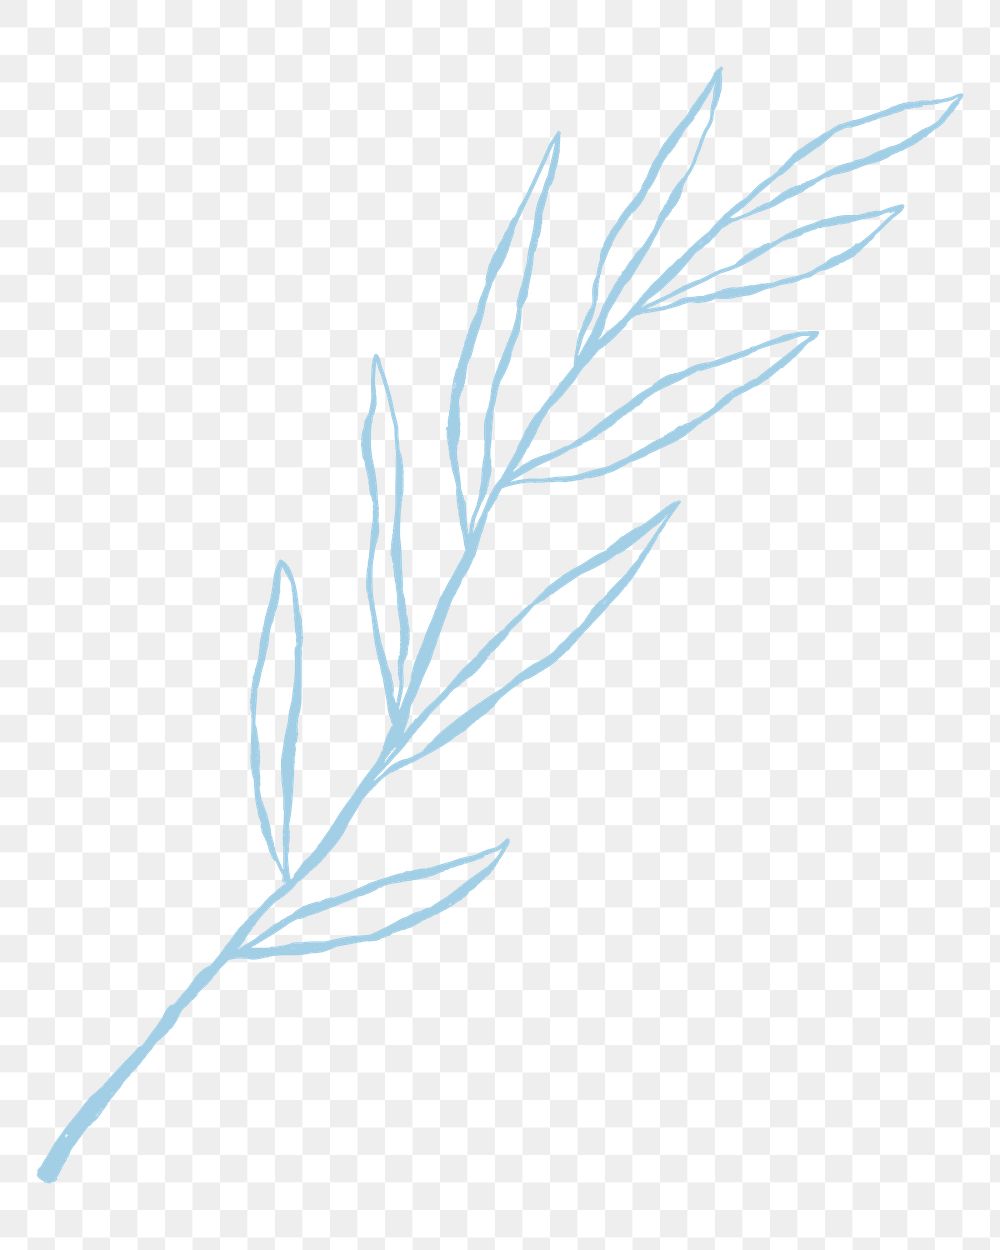 Leaf png cute blue doodle illustration with branch